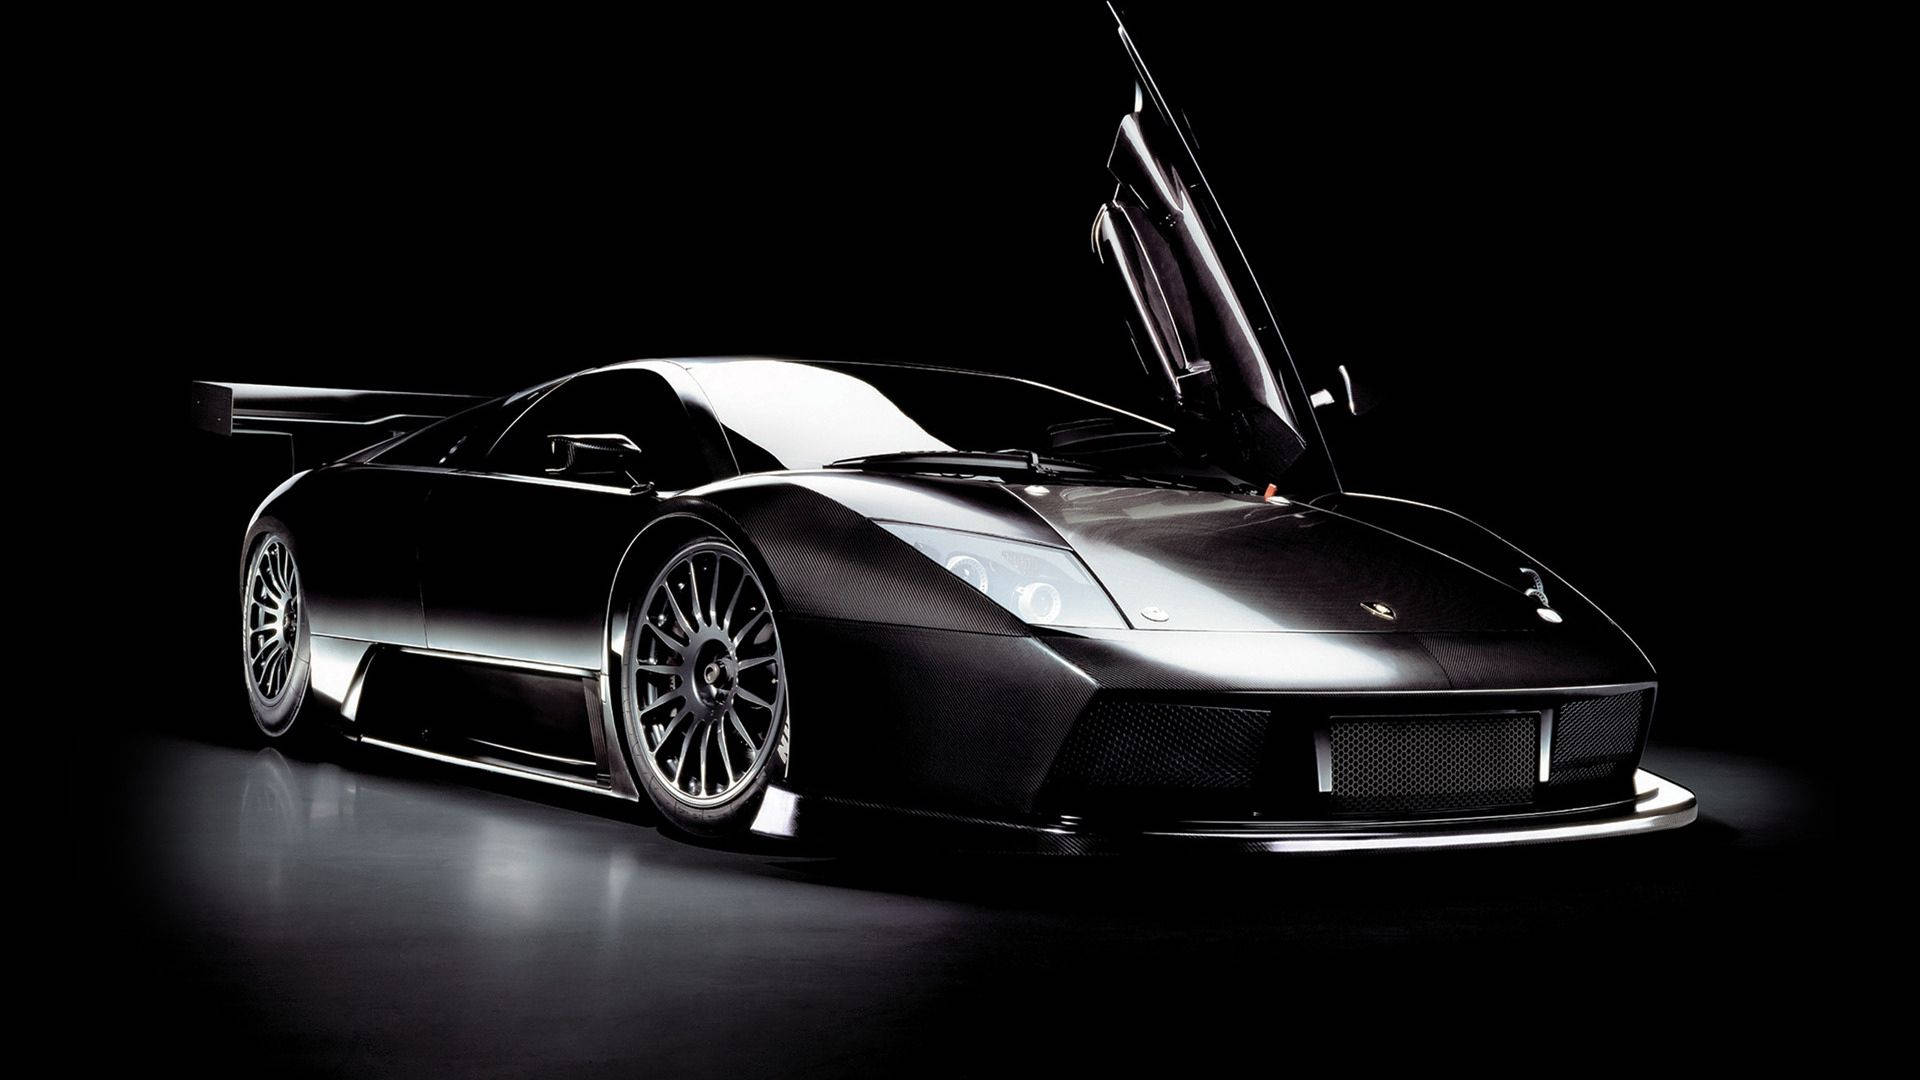 Stunning Black Lamborghini Gallardo Car Wallpaper